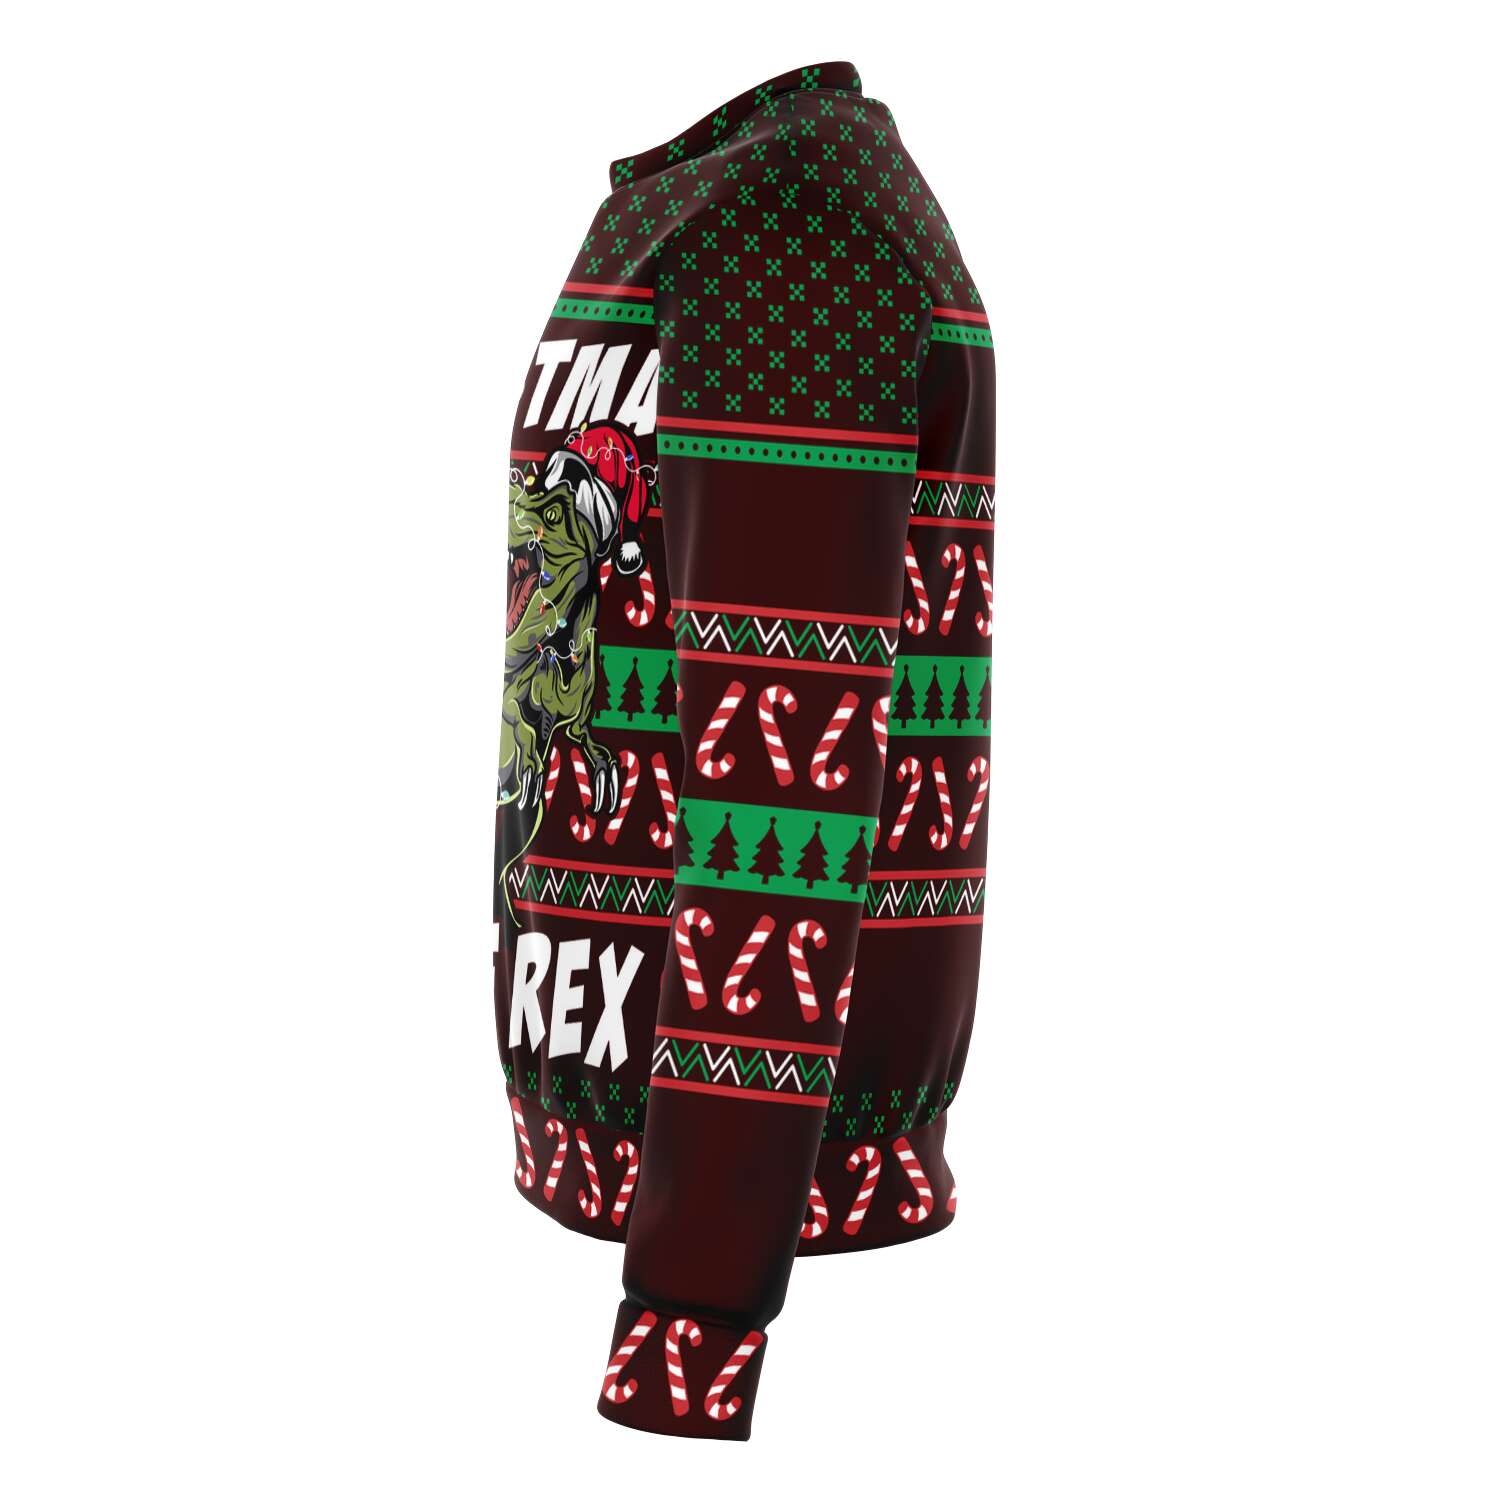 Tree Rex Ugly Christmas Sweatshirt Fashion Sweatshirt - AOP Subliminator 